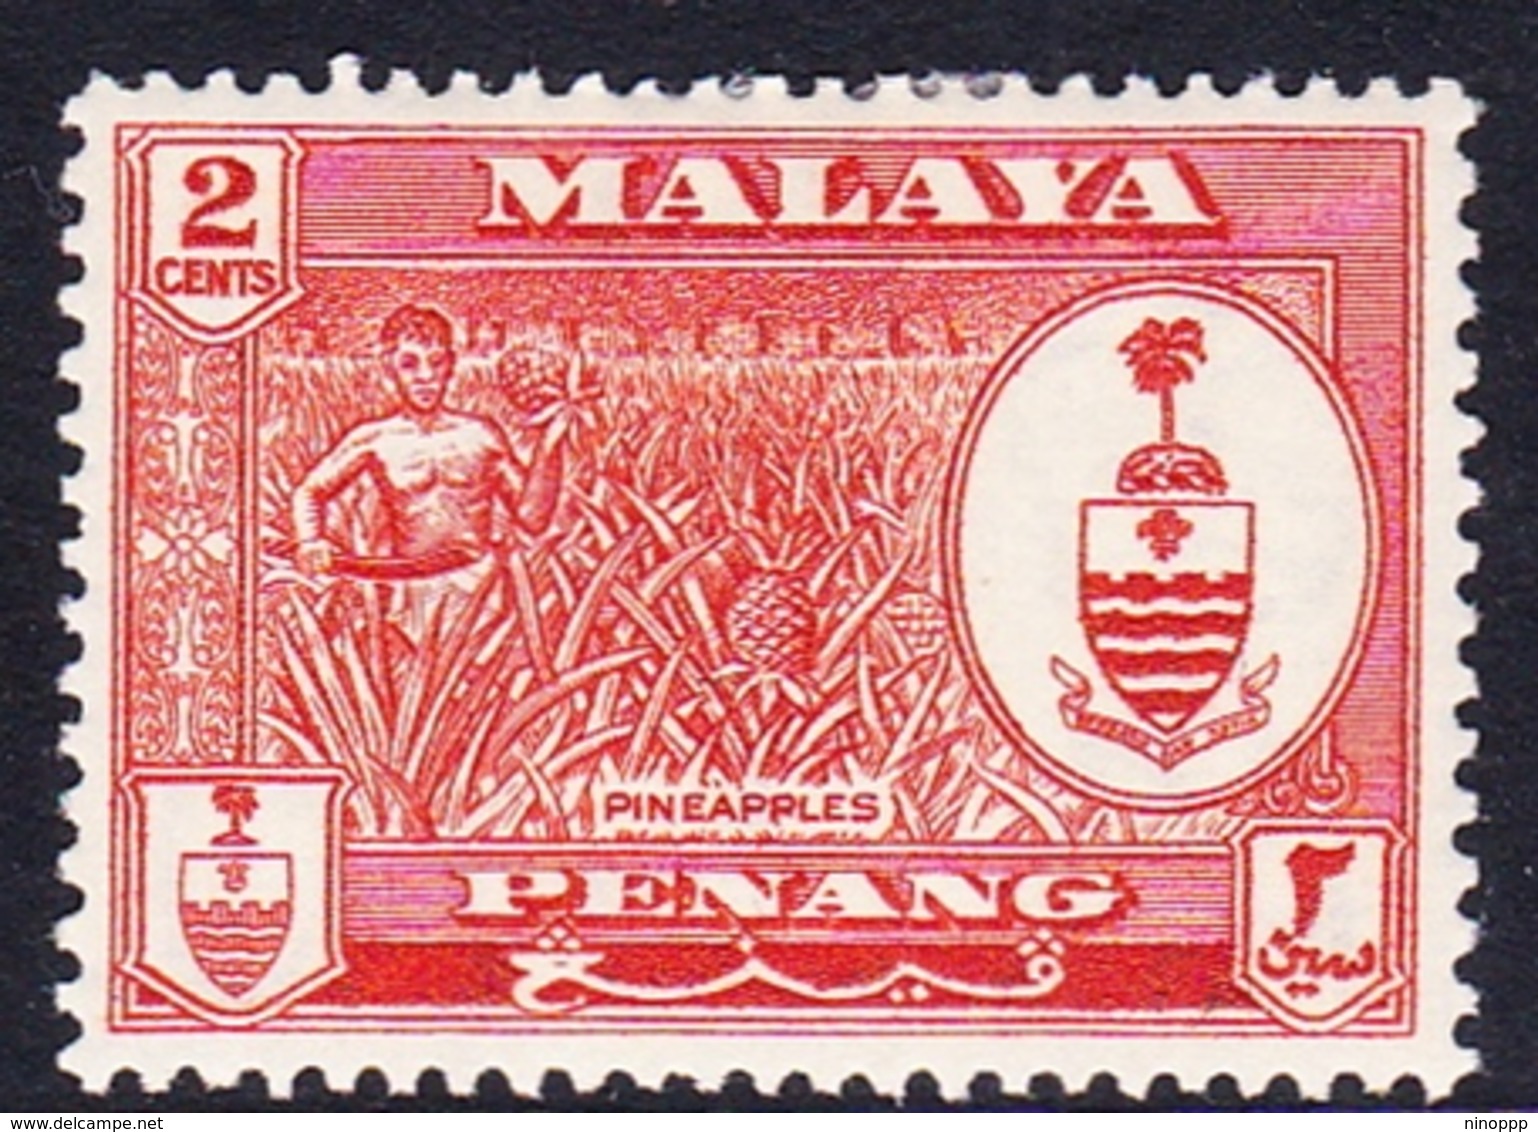 Malaysia-Penang SG 56 1960 Definitives, 2c Orange, Mint Hinged - Penang